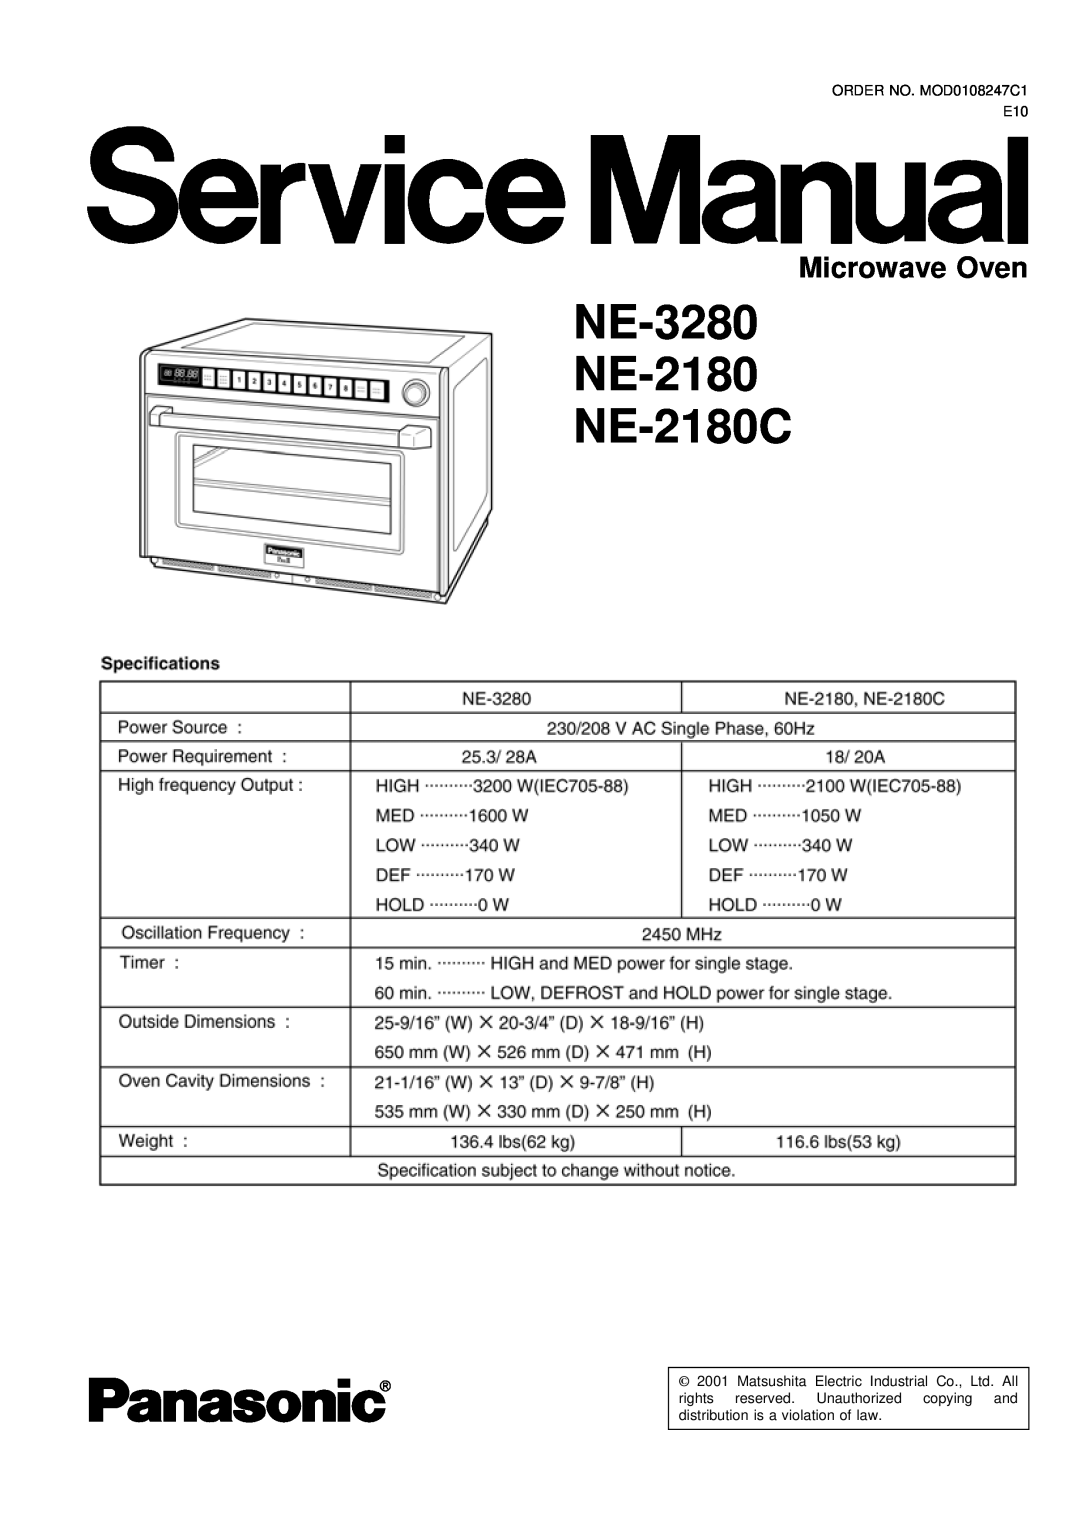 Panasonic manual Microwave Oven, NE-3280 NE-2180 NE-2180C 